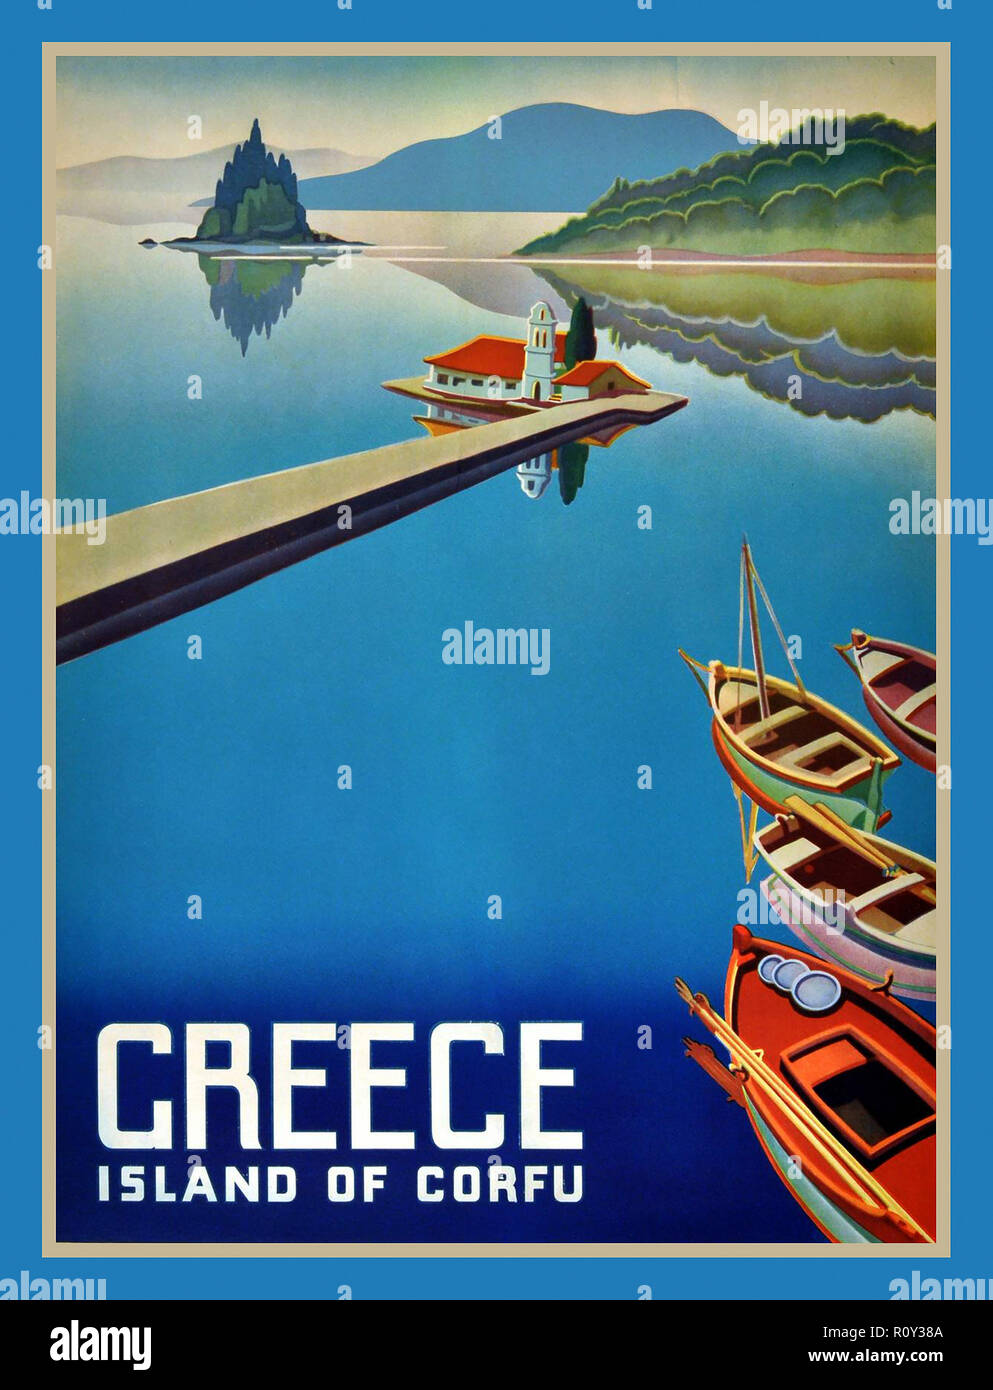 CORFU GREECE Vintage retro 1950's Travel Vacation Holiday Poster Bucolic still reflections water sea boats scene scenery Corfu Greek Island Greece Stock Photo